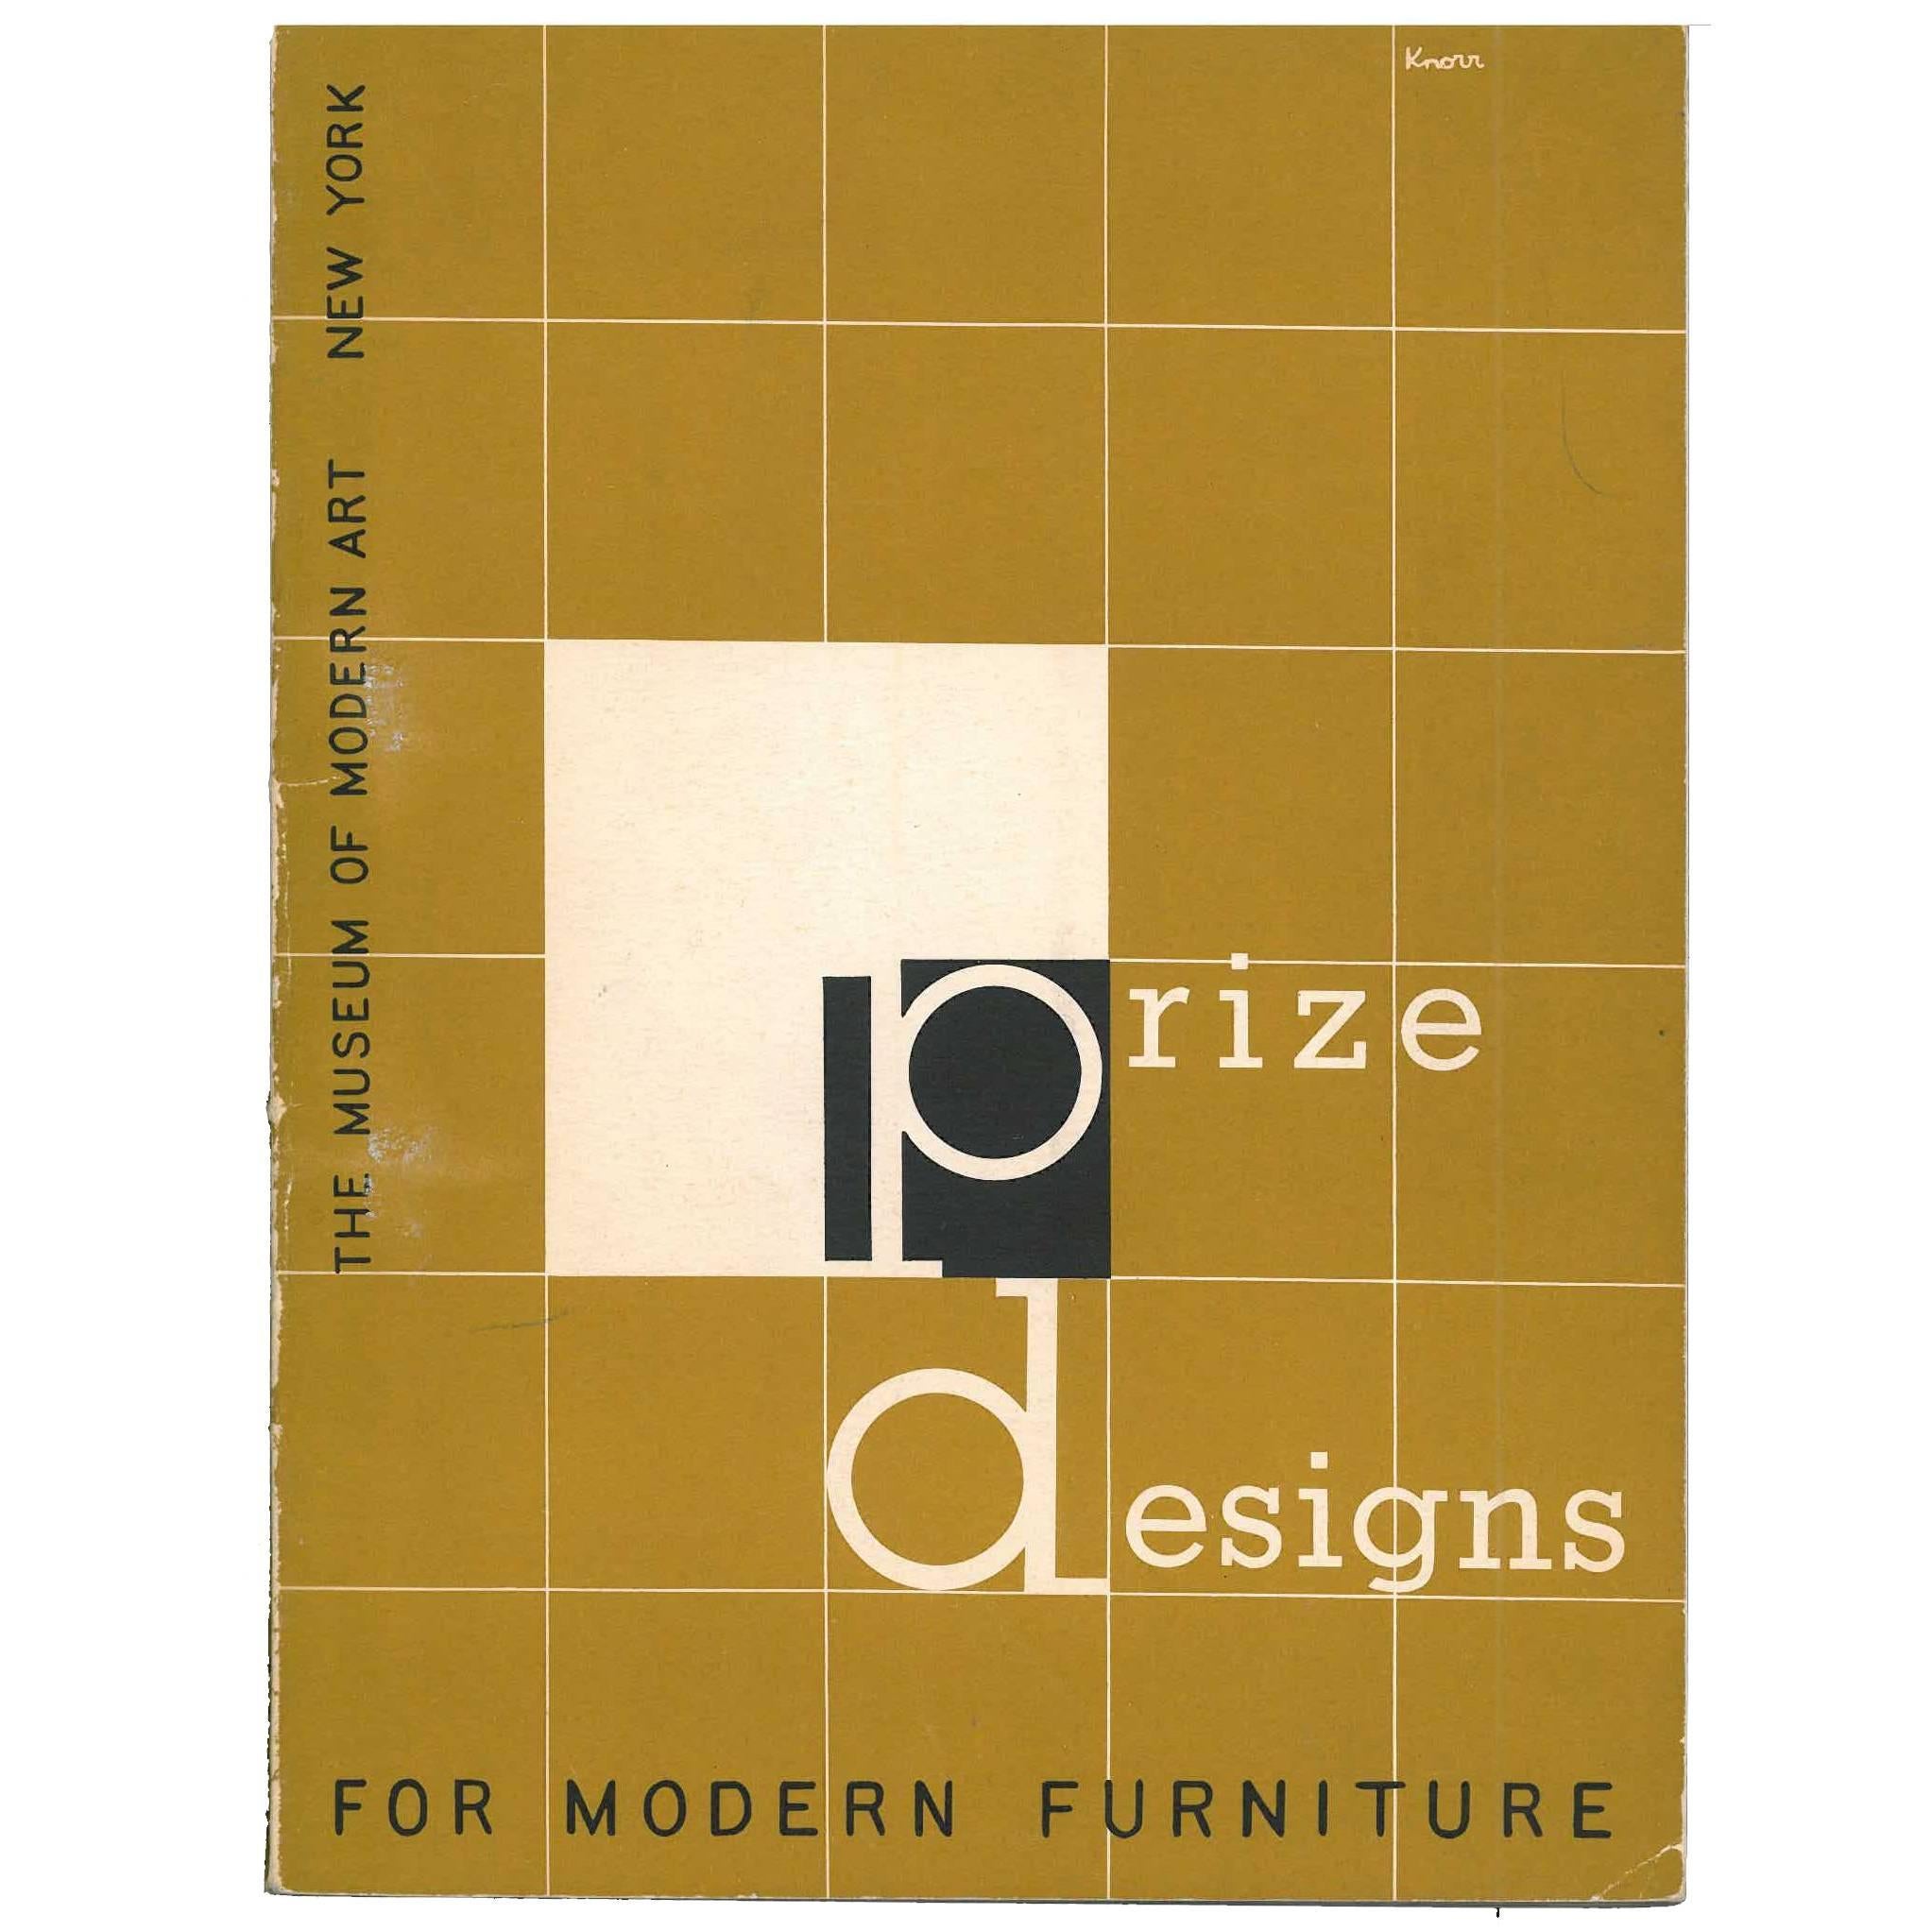 Prize Designs for Modern Furniture (Book)